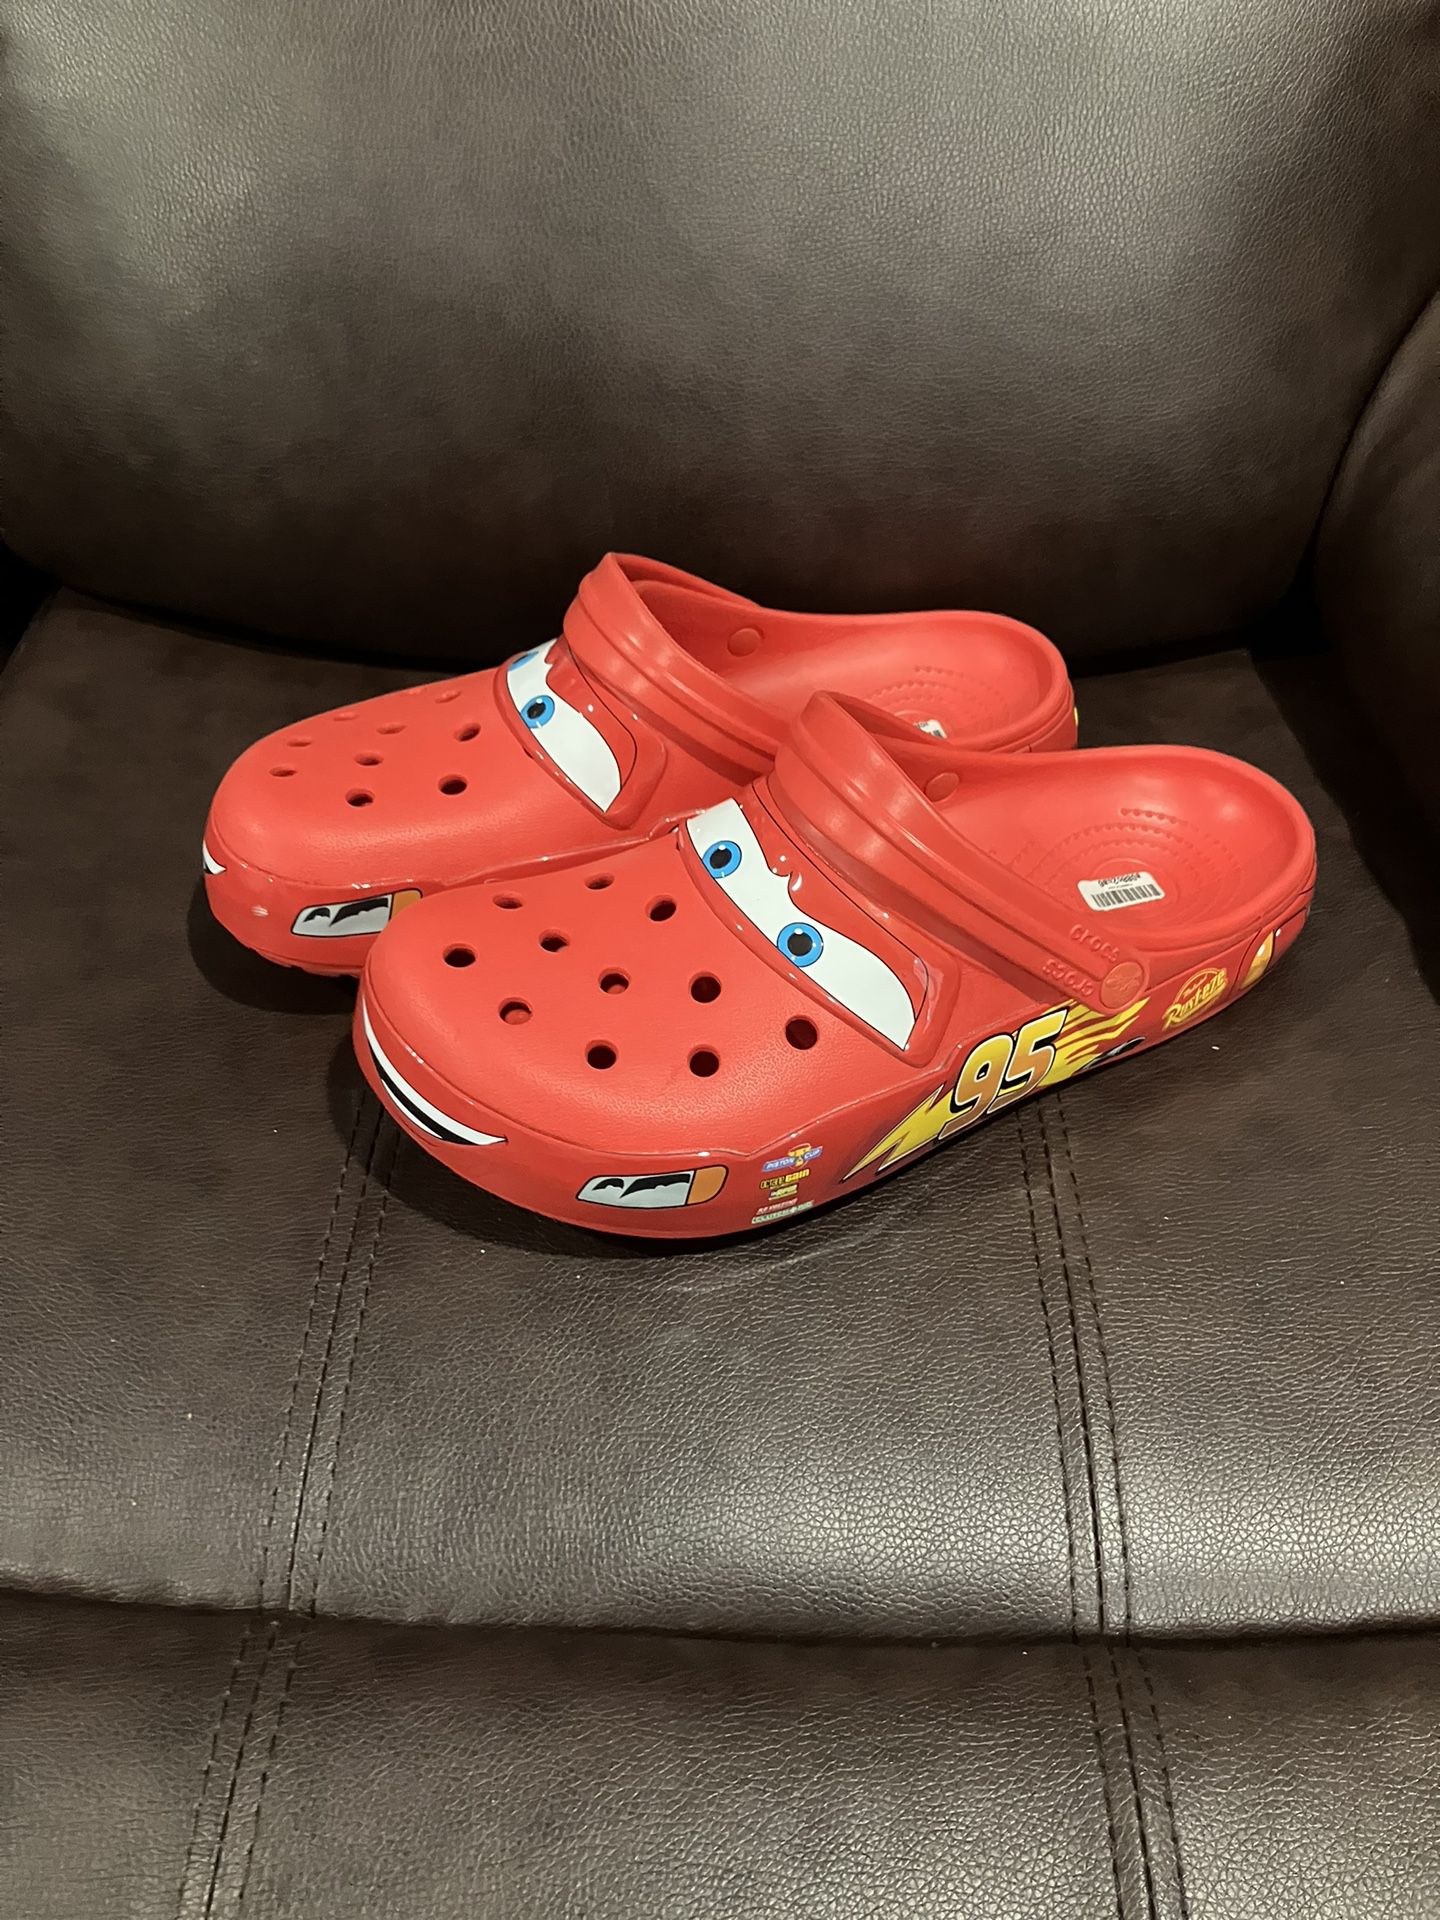 Retail Reference Lightning McQueen Crocs!! ⚡️🏎 : r